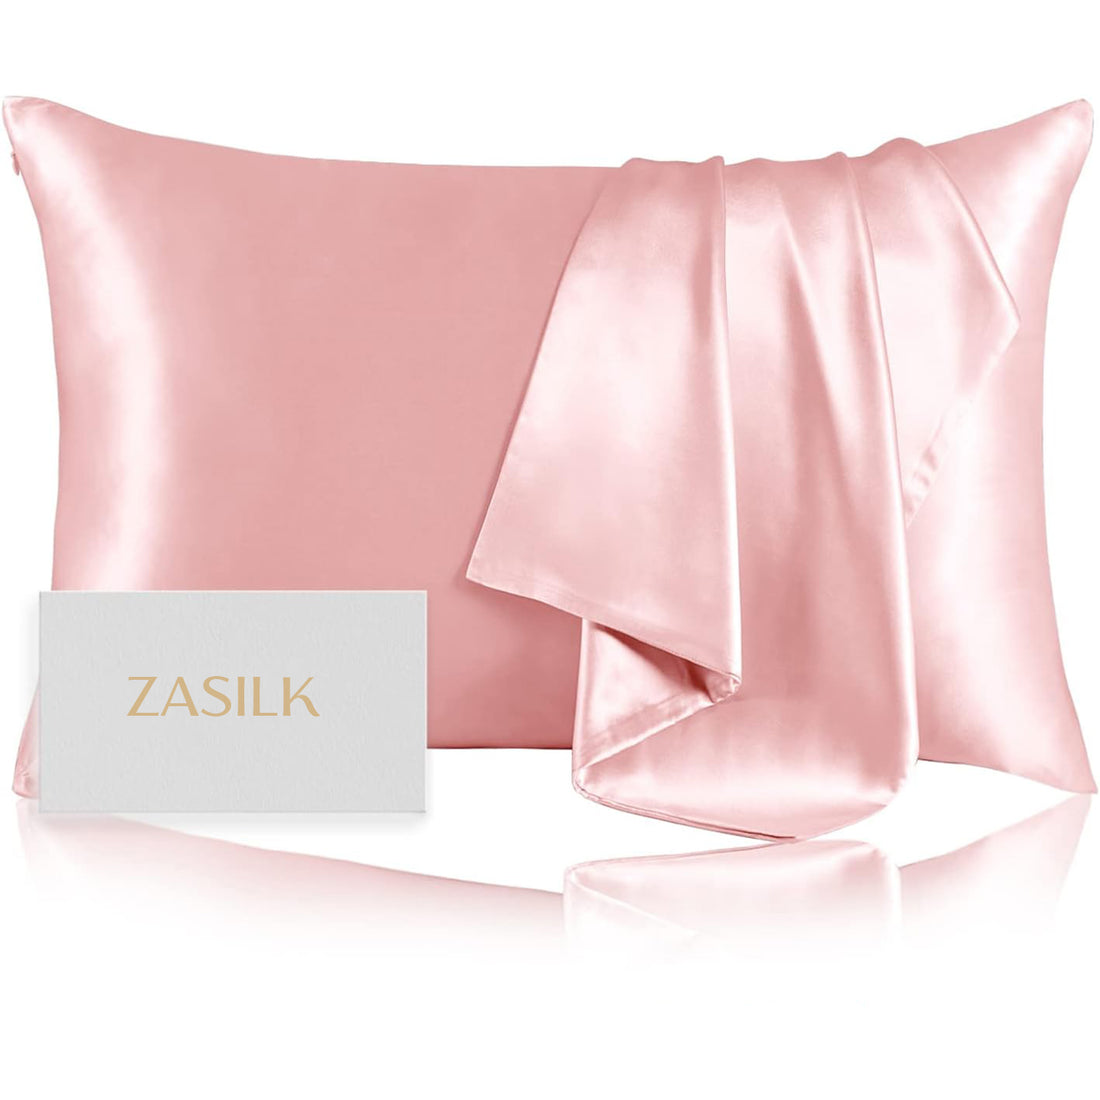 ZASILK Mulberry Silk Pillowcase - Premium Quality Silk Pillowcases for Hair Care